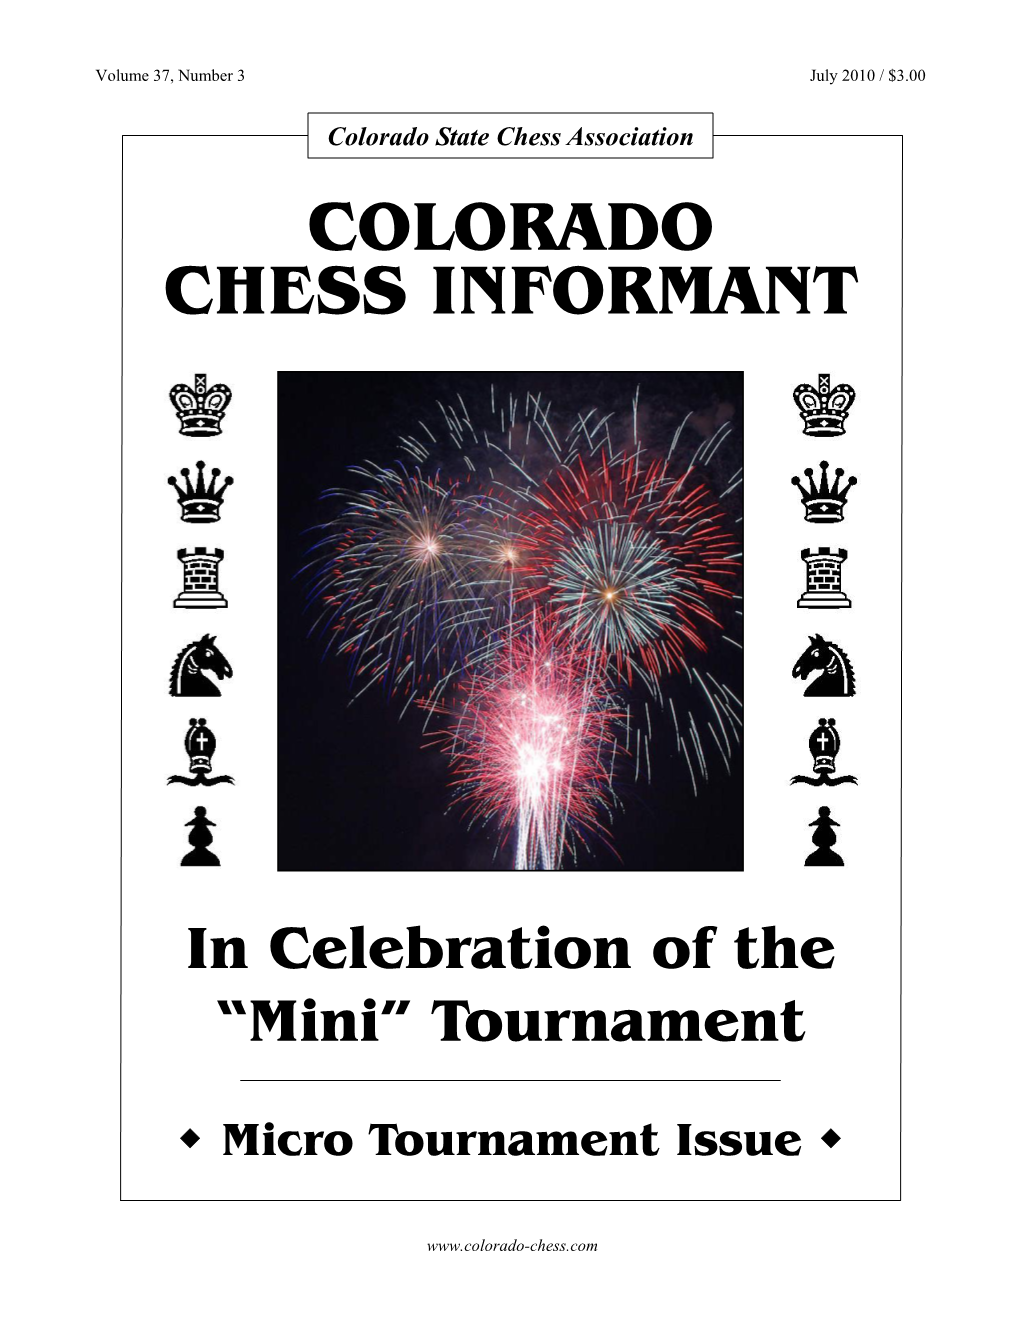 Colorado Chess Informant